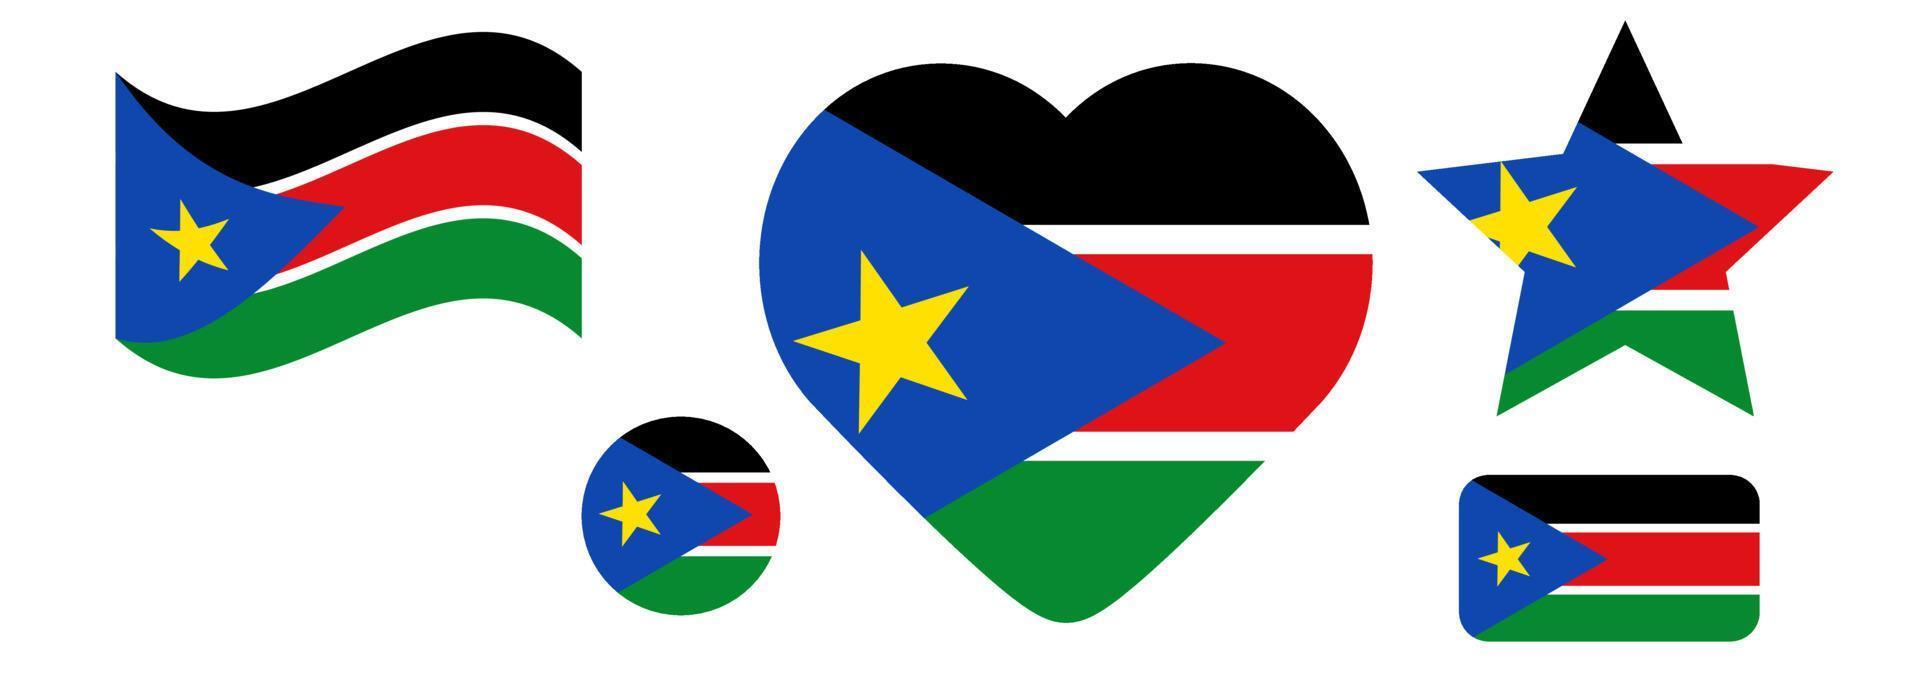 South Sudan national flag, vector illustration.